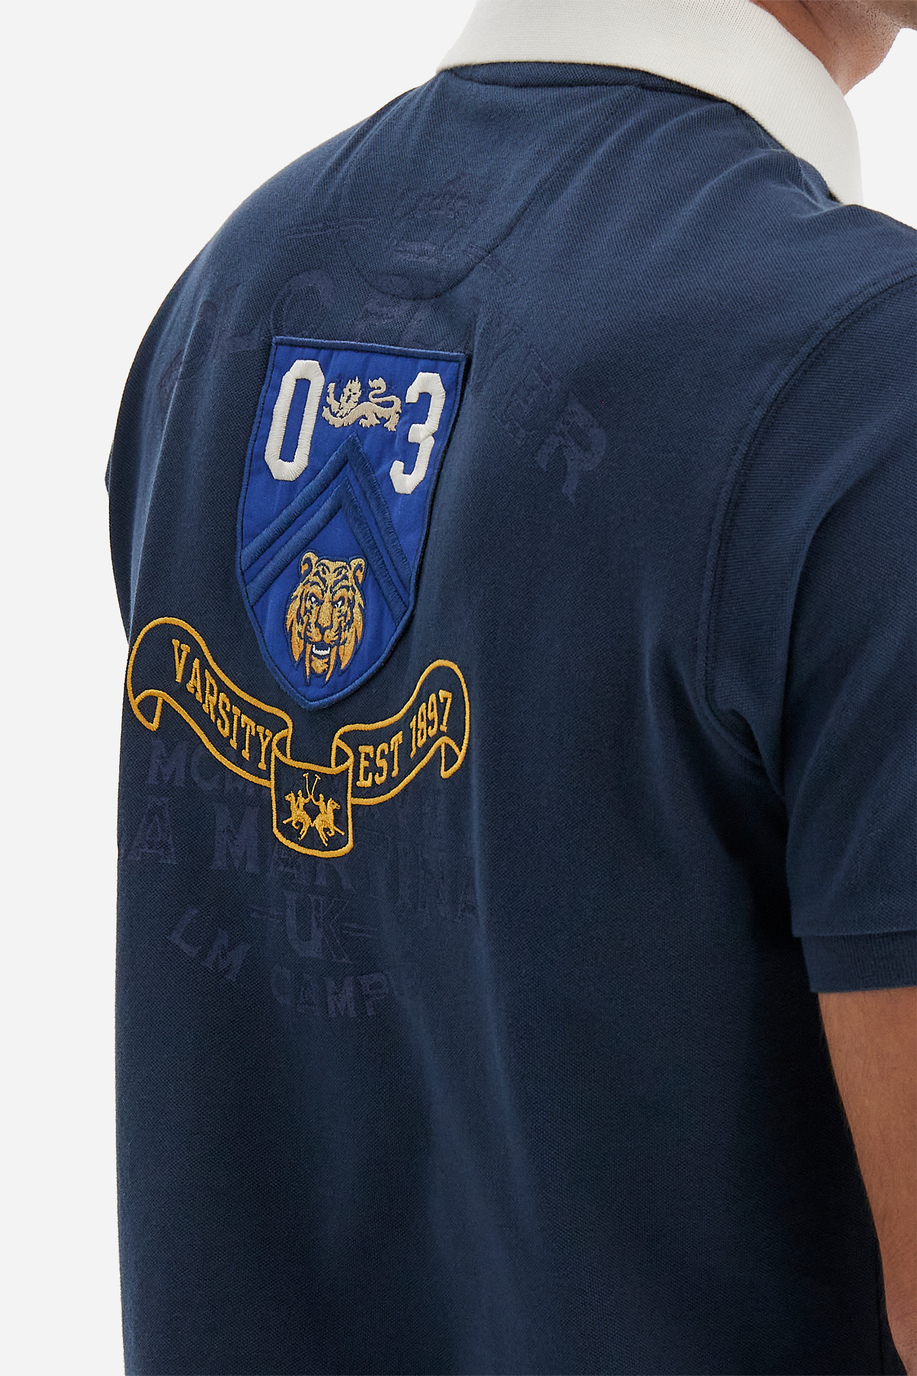 Polo Academy Herren-Kurzarm-Poloshirt mit Maxi-Patch in Volltonfarbe und kontrastierendem Kragen - Vedis - Herren | La Martina - Official Online Shop